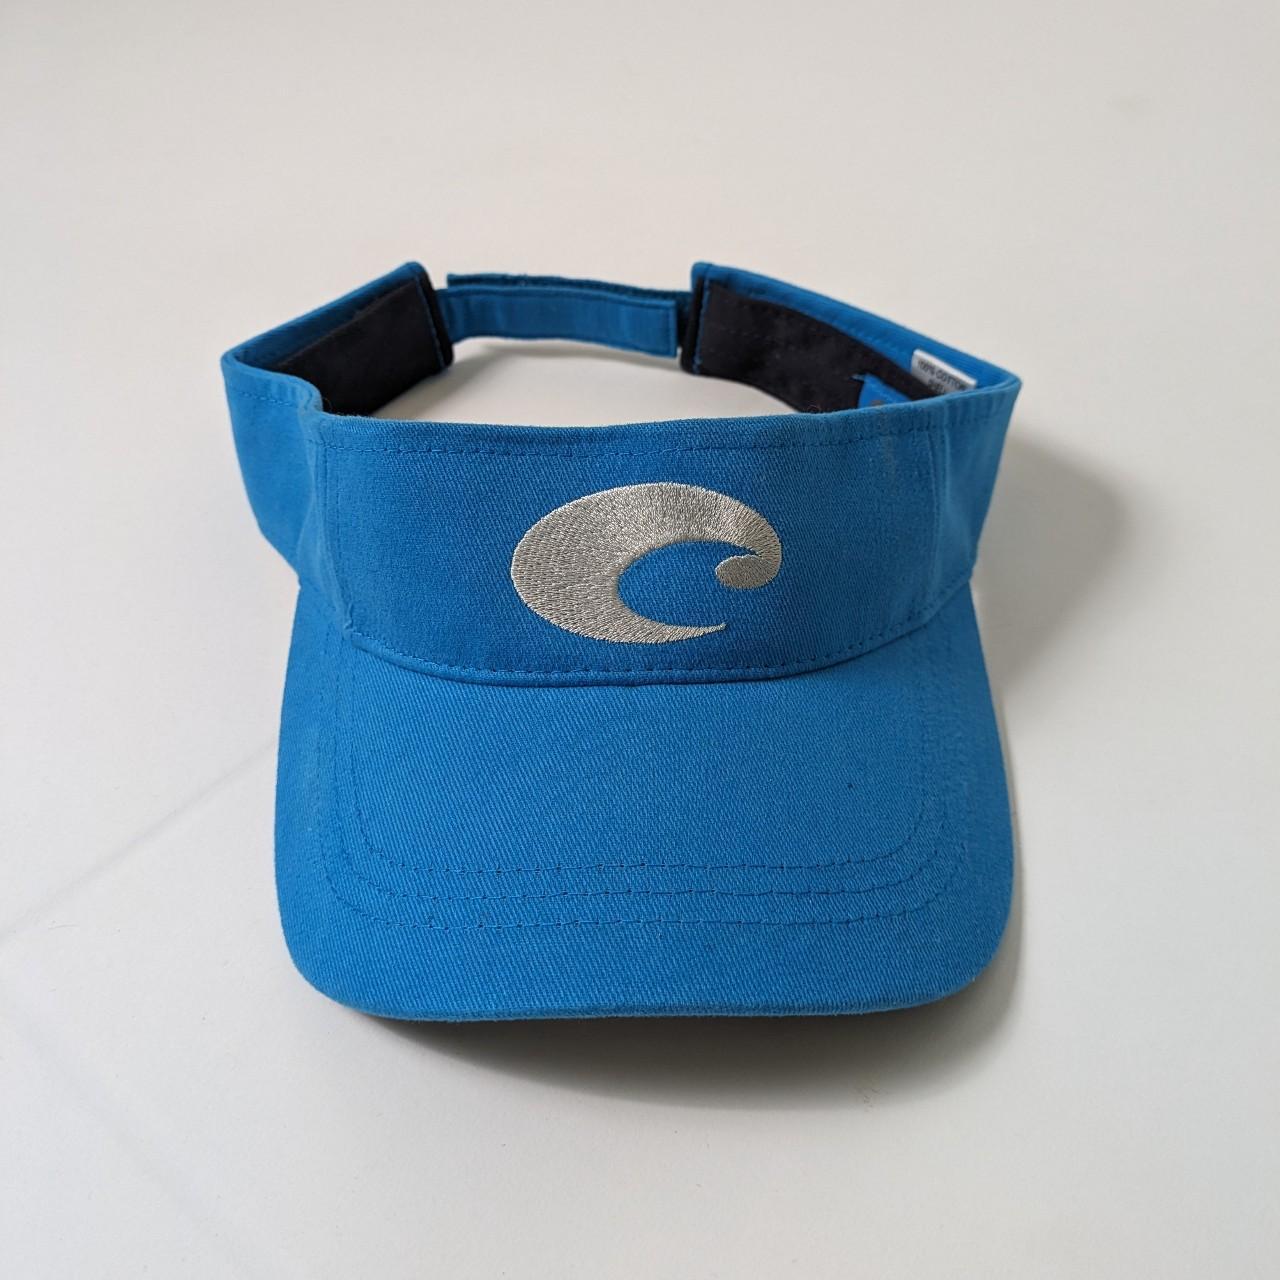 Costa visor in excellent condition!! #costa #caps - Depop